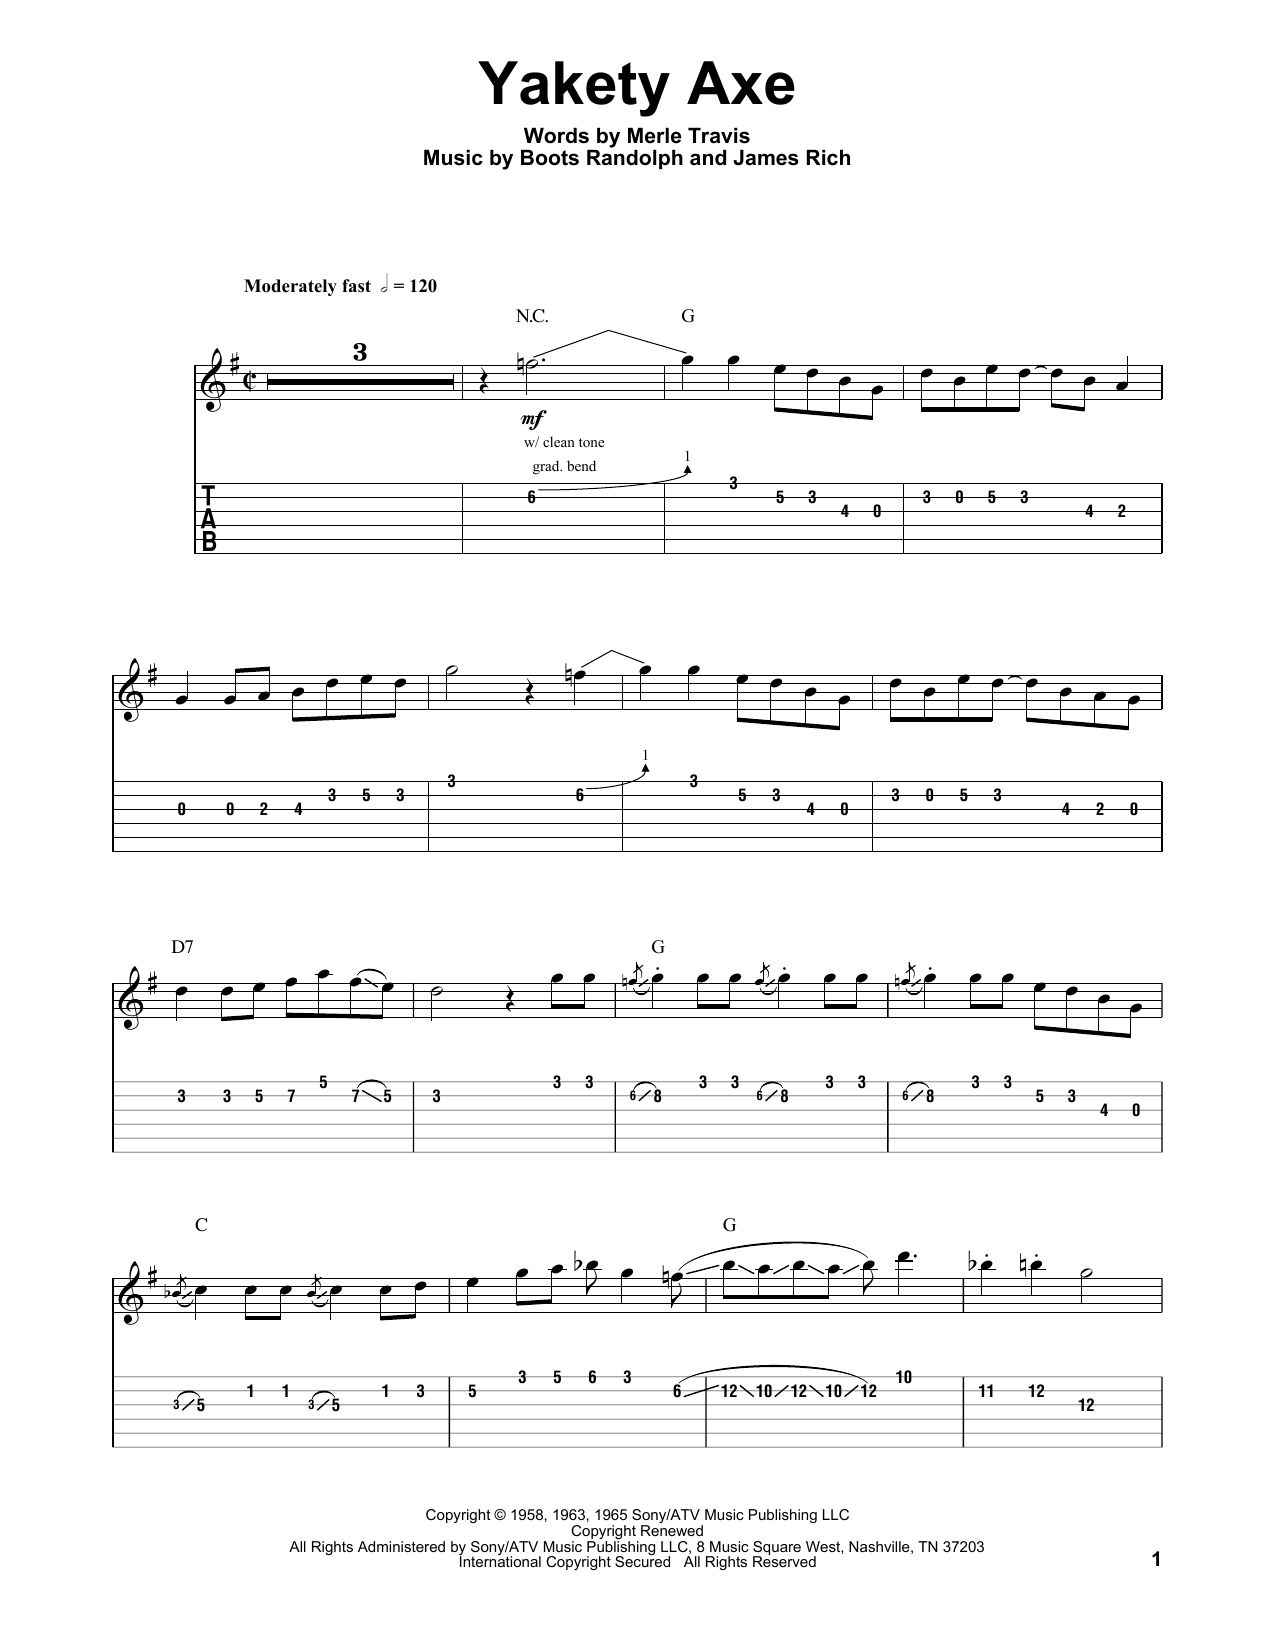 Chet Atkins Yakety Axe Sheet Music Notes & Chords for Guitar Tab Play-Along - Download or Print PDF